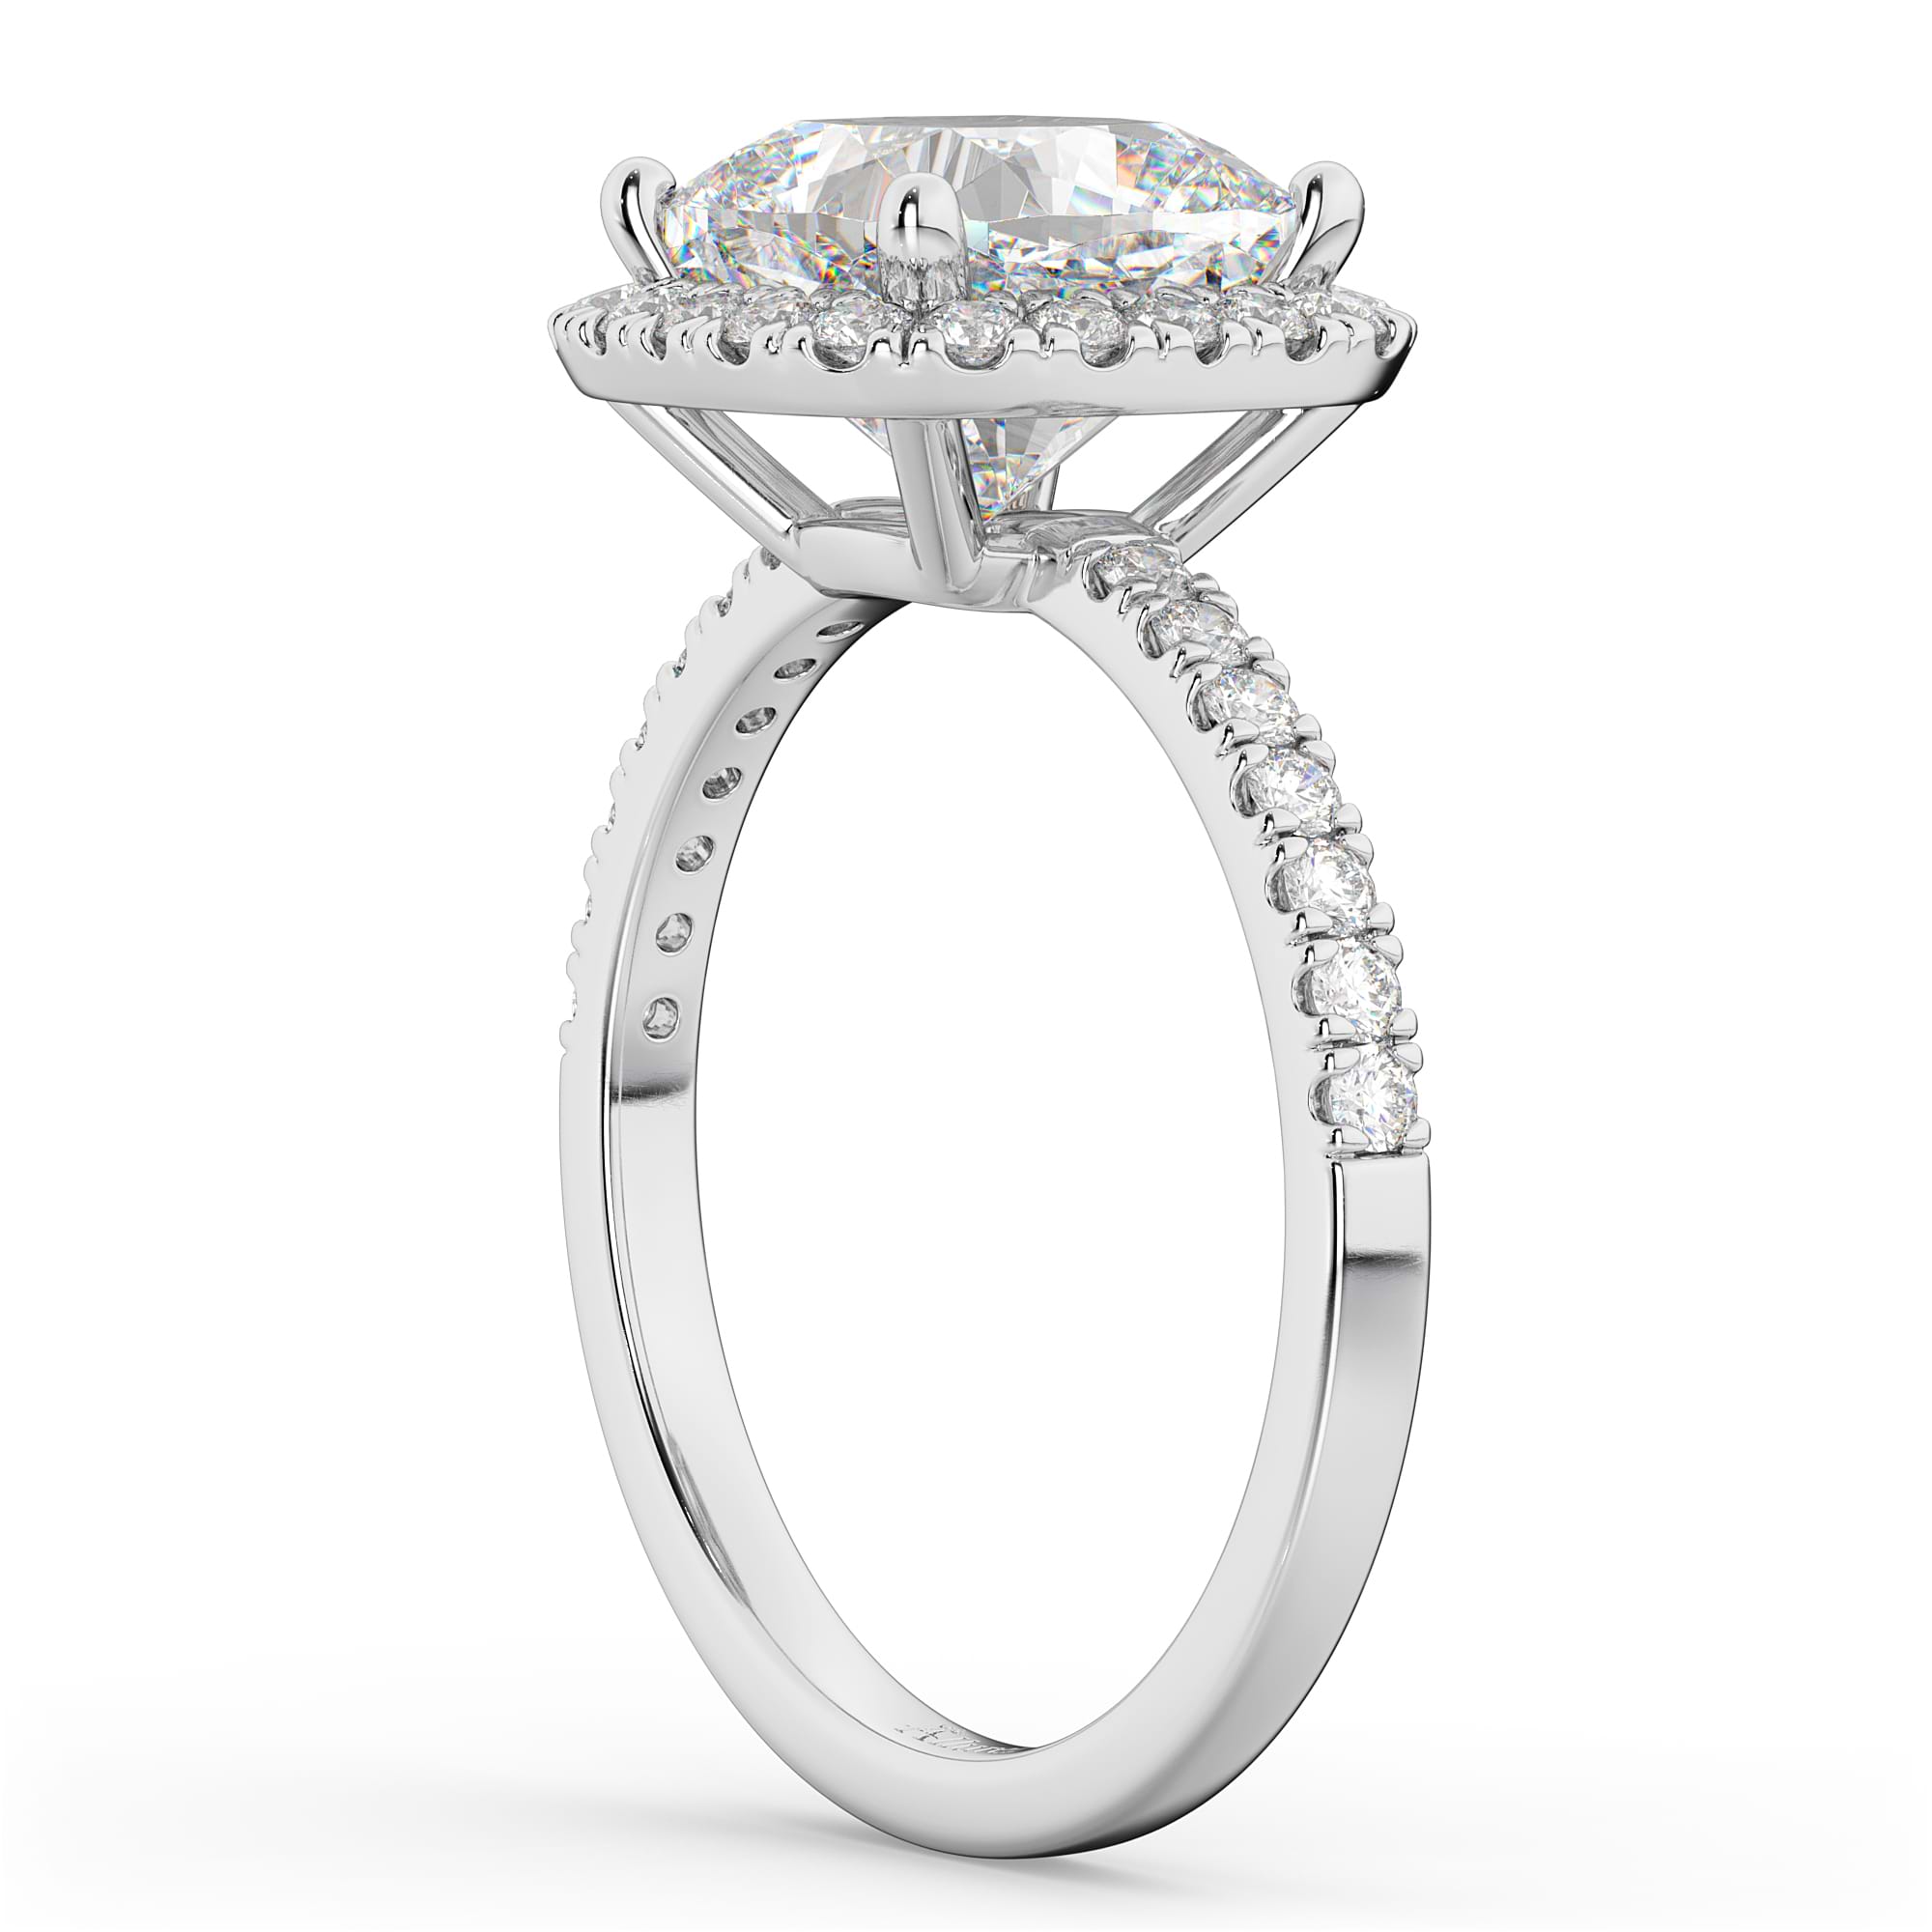 Cushion Cut Halo Moissanite & Diamond Engagement Ring 14k White Gold (2.66ct)